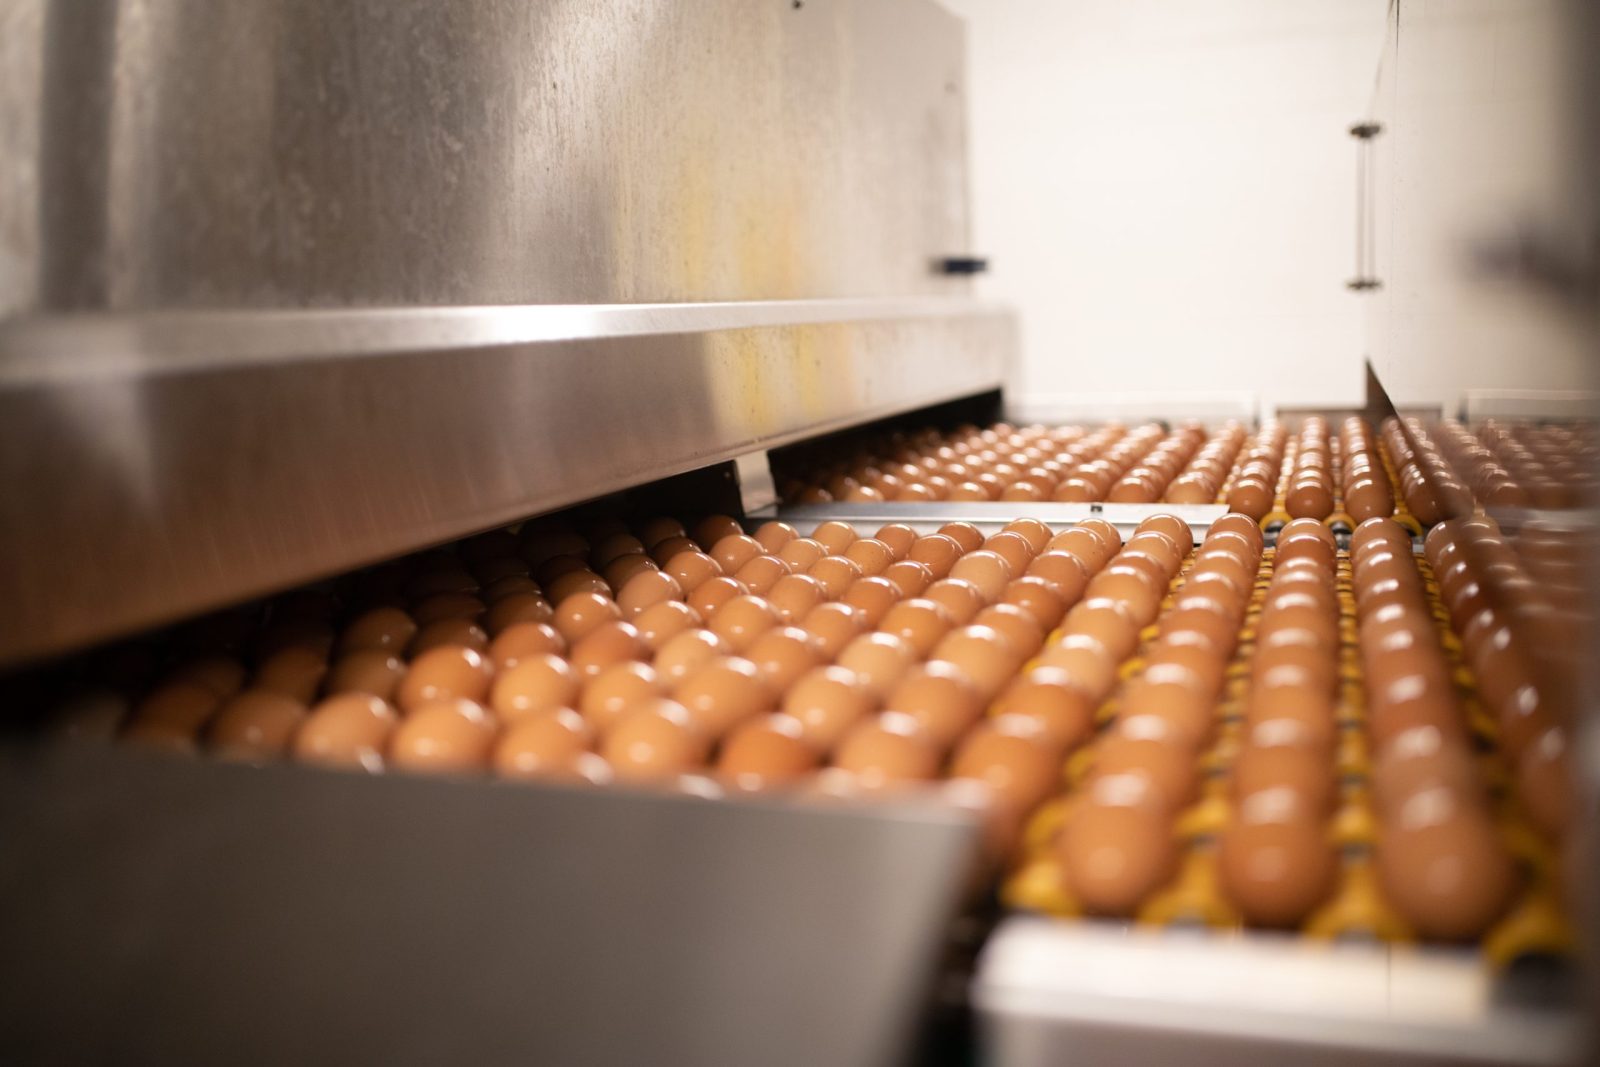 Scenes from inside Vital Farm's egg processing plant in Springfield